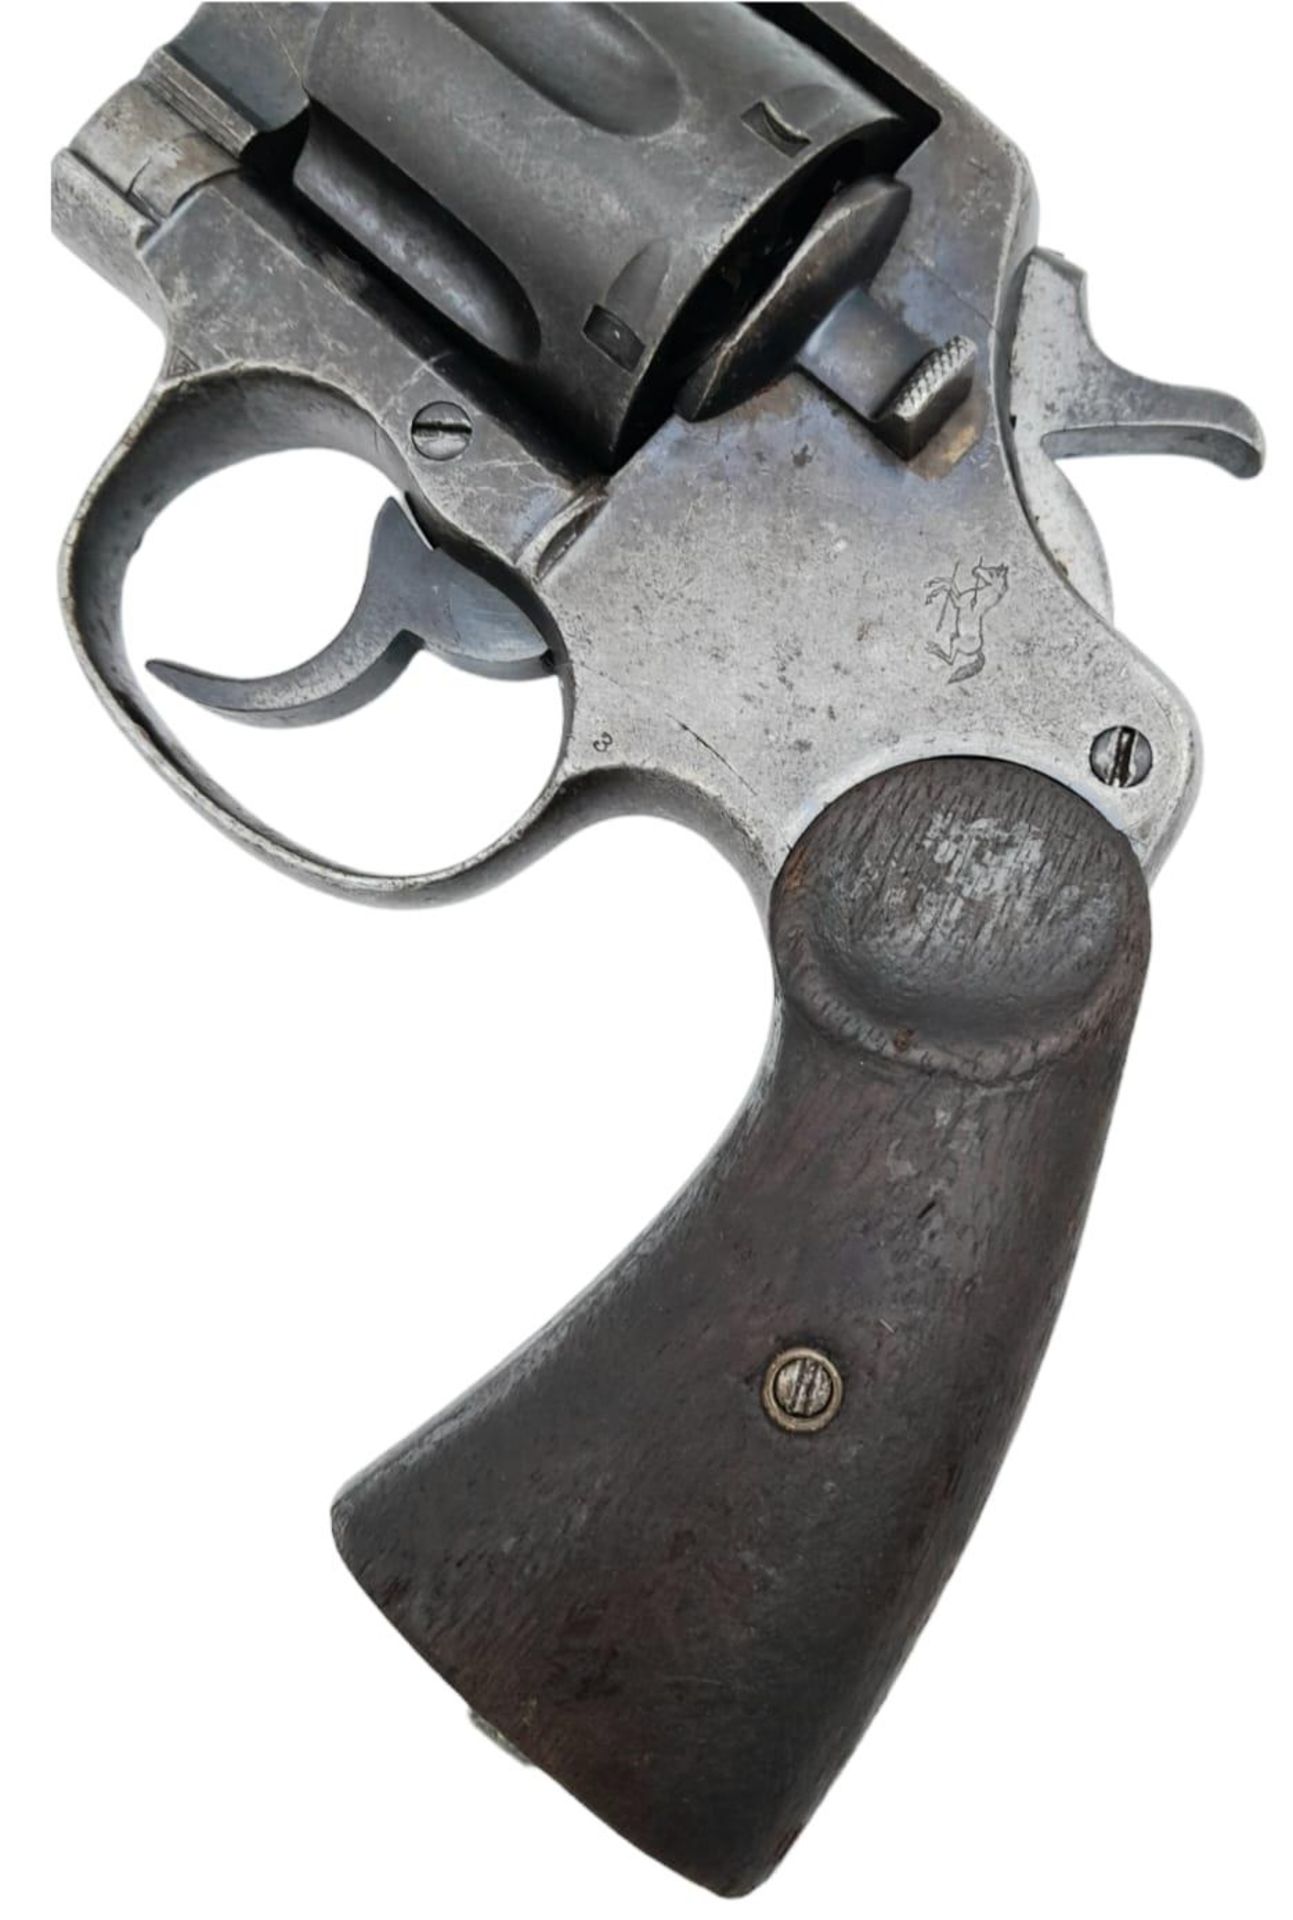 A Vintage Colt Service Revolver - 455 ELEY. This USA made pistol has a 5.5 inch barrel and battle- - Bild 4 aus 11